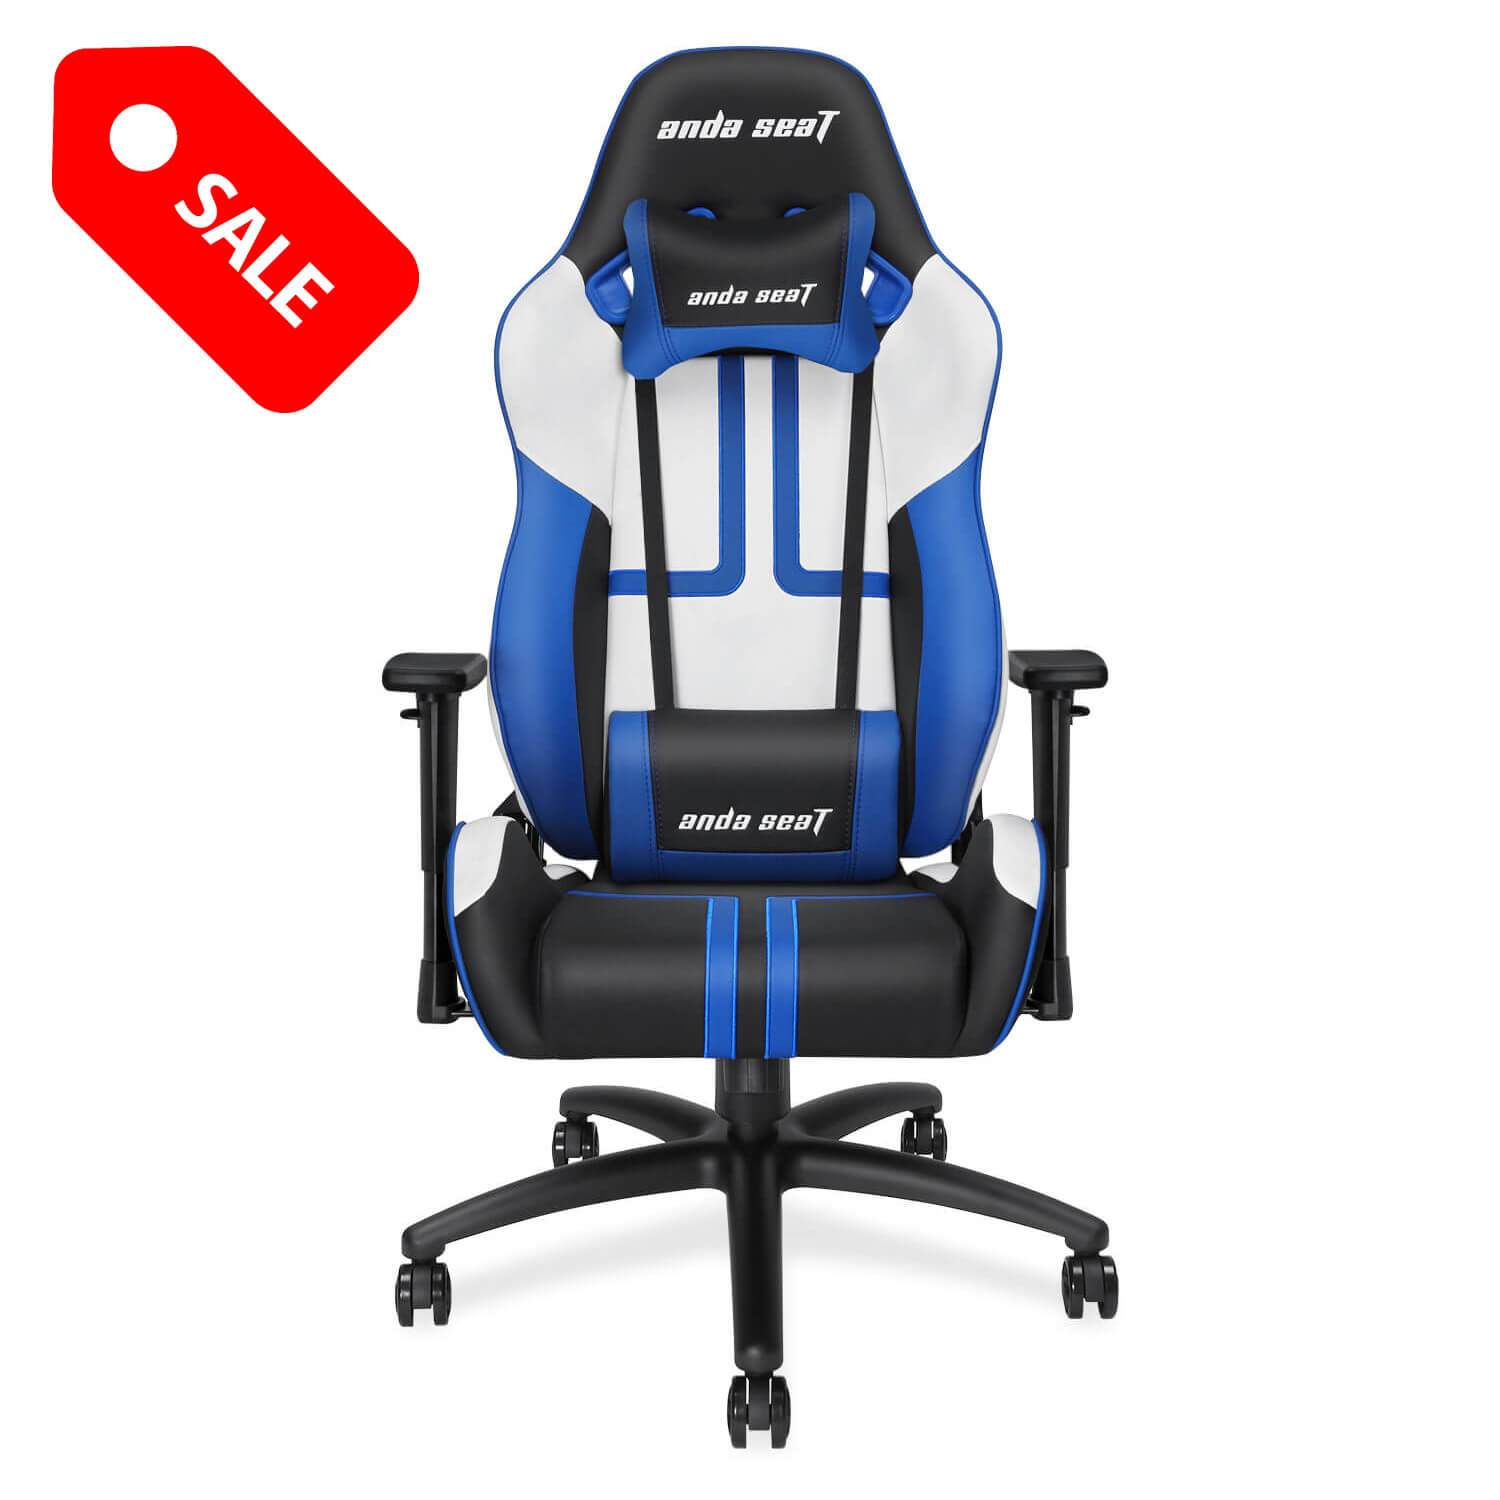 Anda Seat Viper Series Gaming Chair Ultimate Comfort Experience